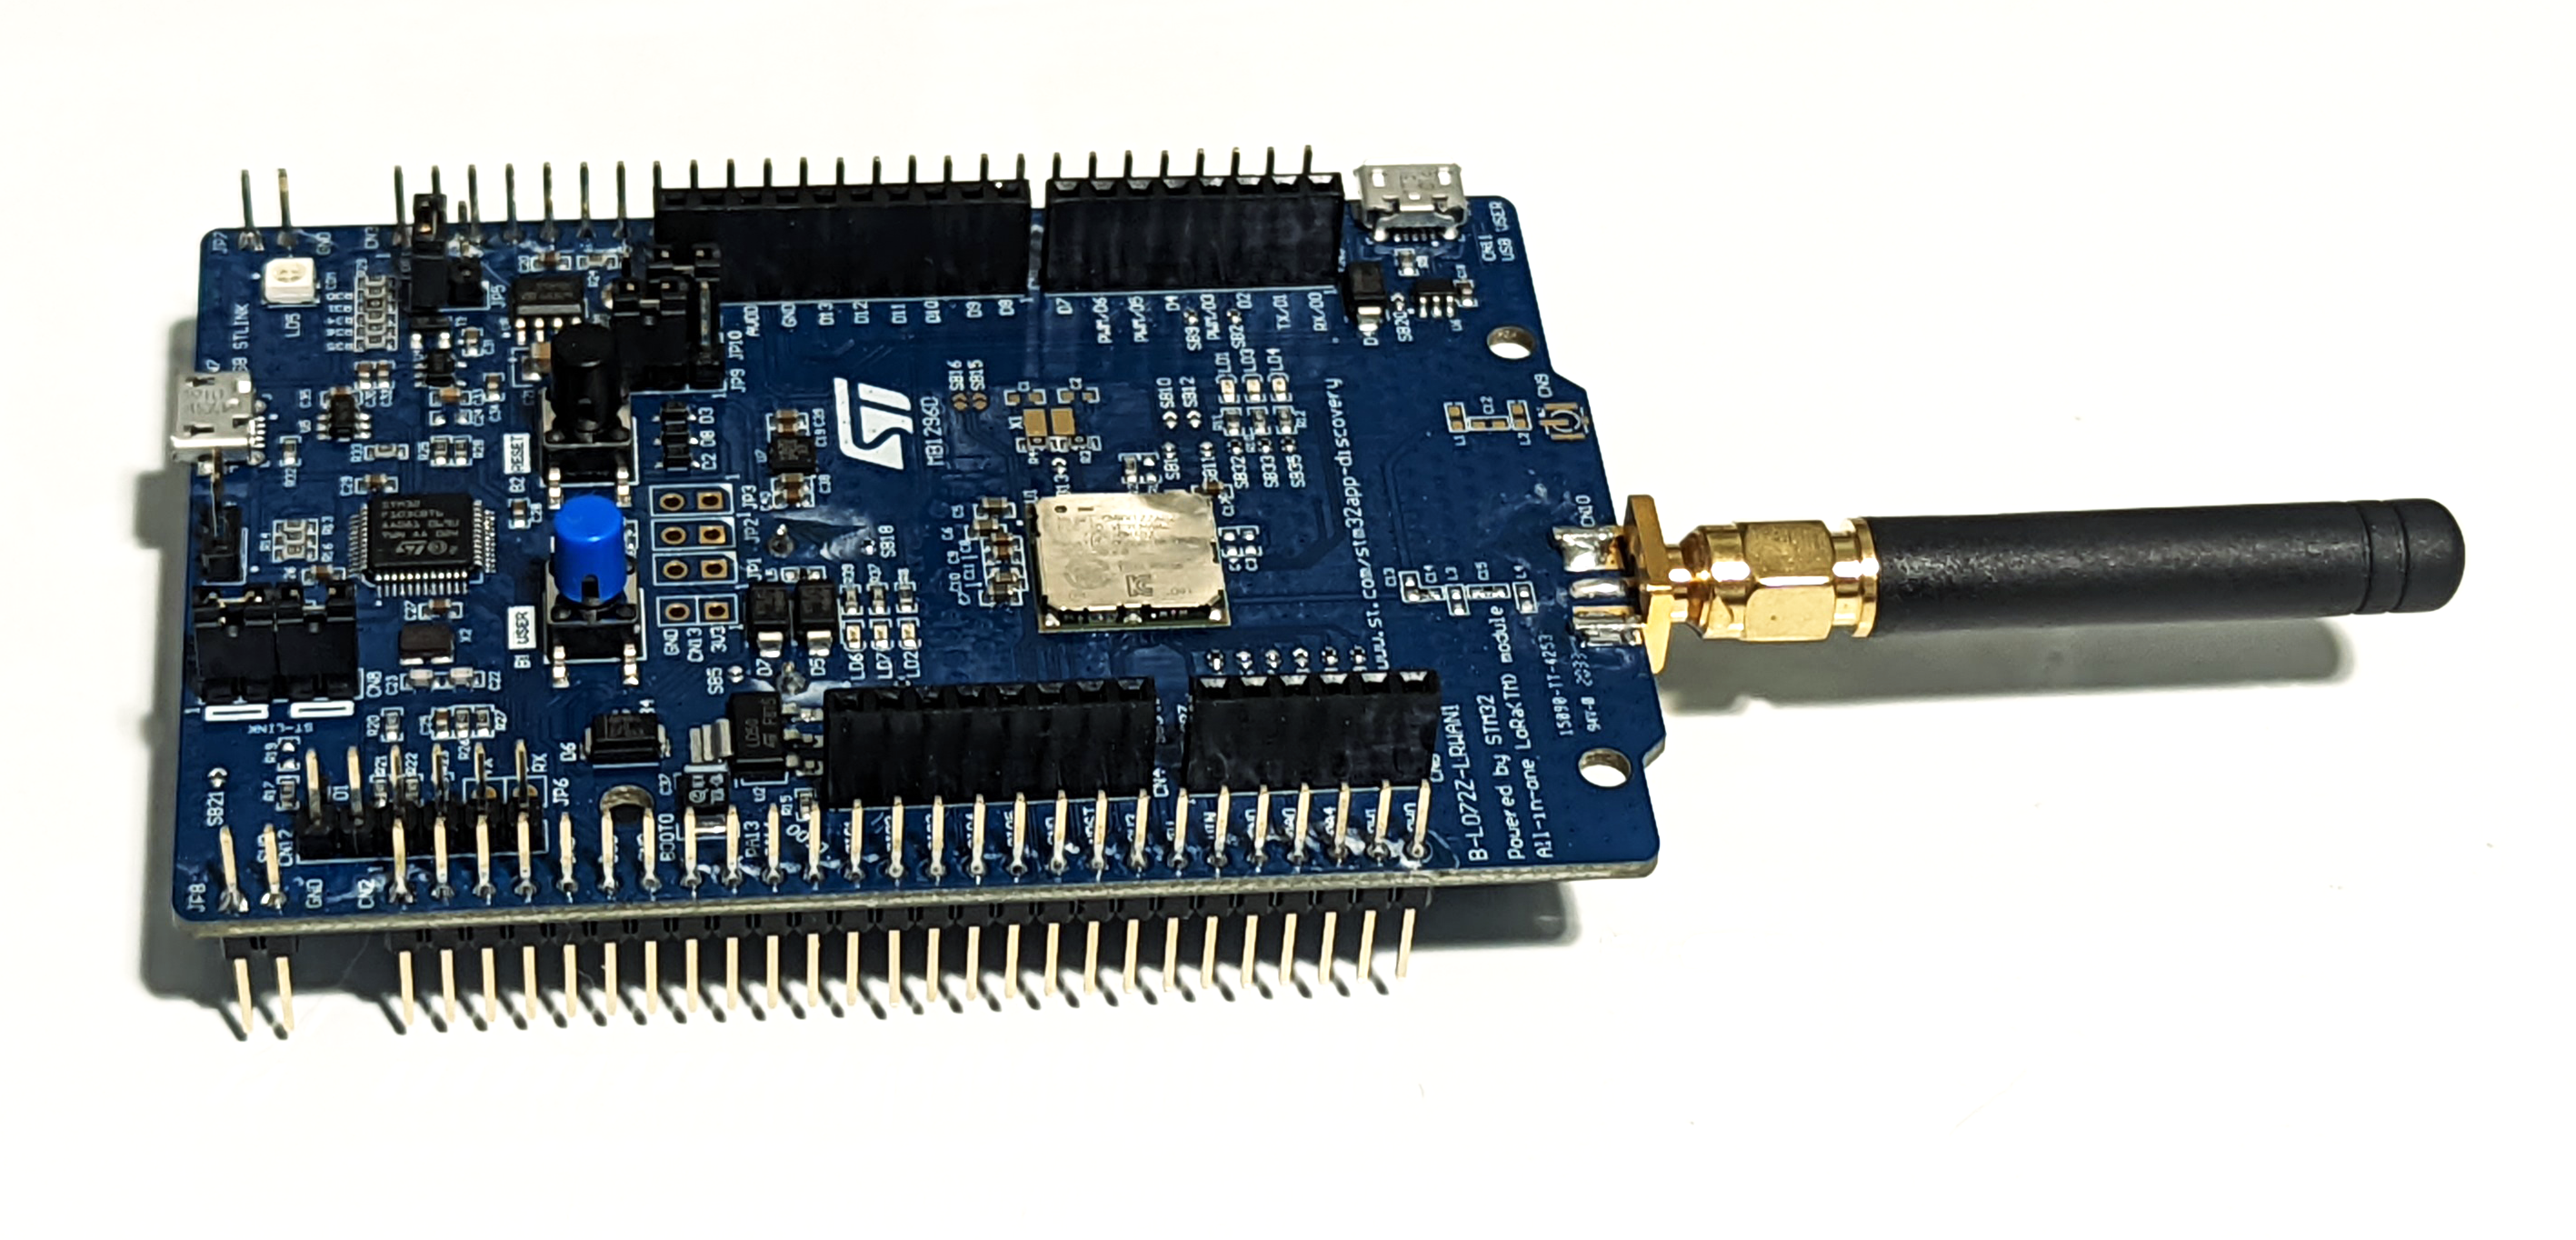 B-L072Z-LRWAN1 board for CMWX1ZZABZ module used as end-device for testing network.